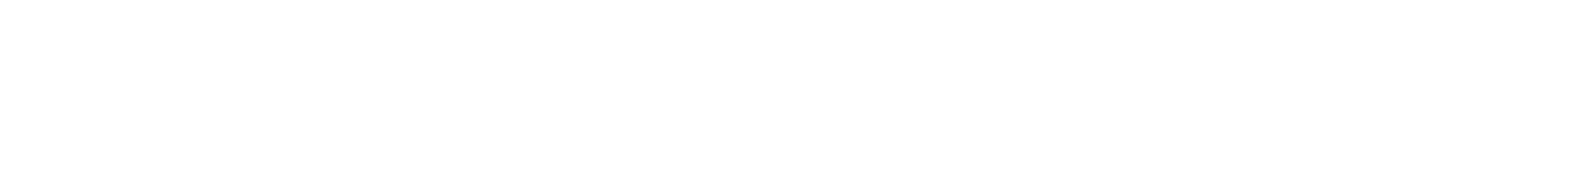 Orrstown Financial Services logo large for dark backgrounds (transparent PNG)